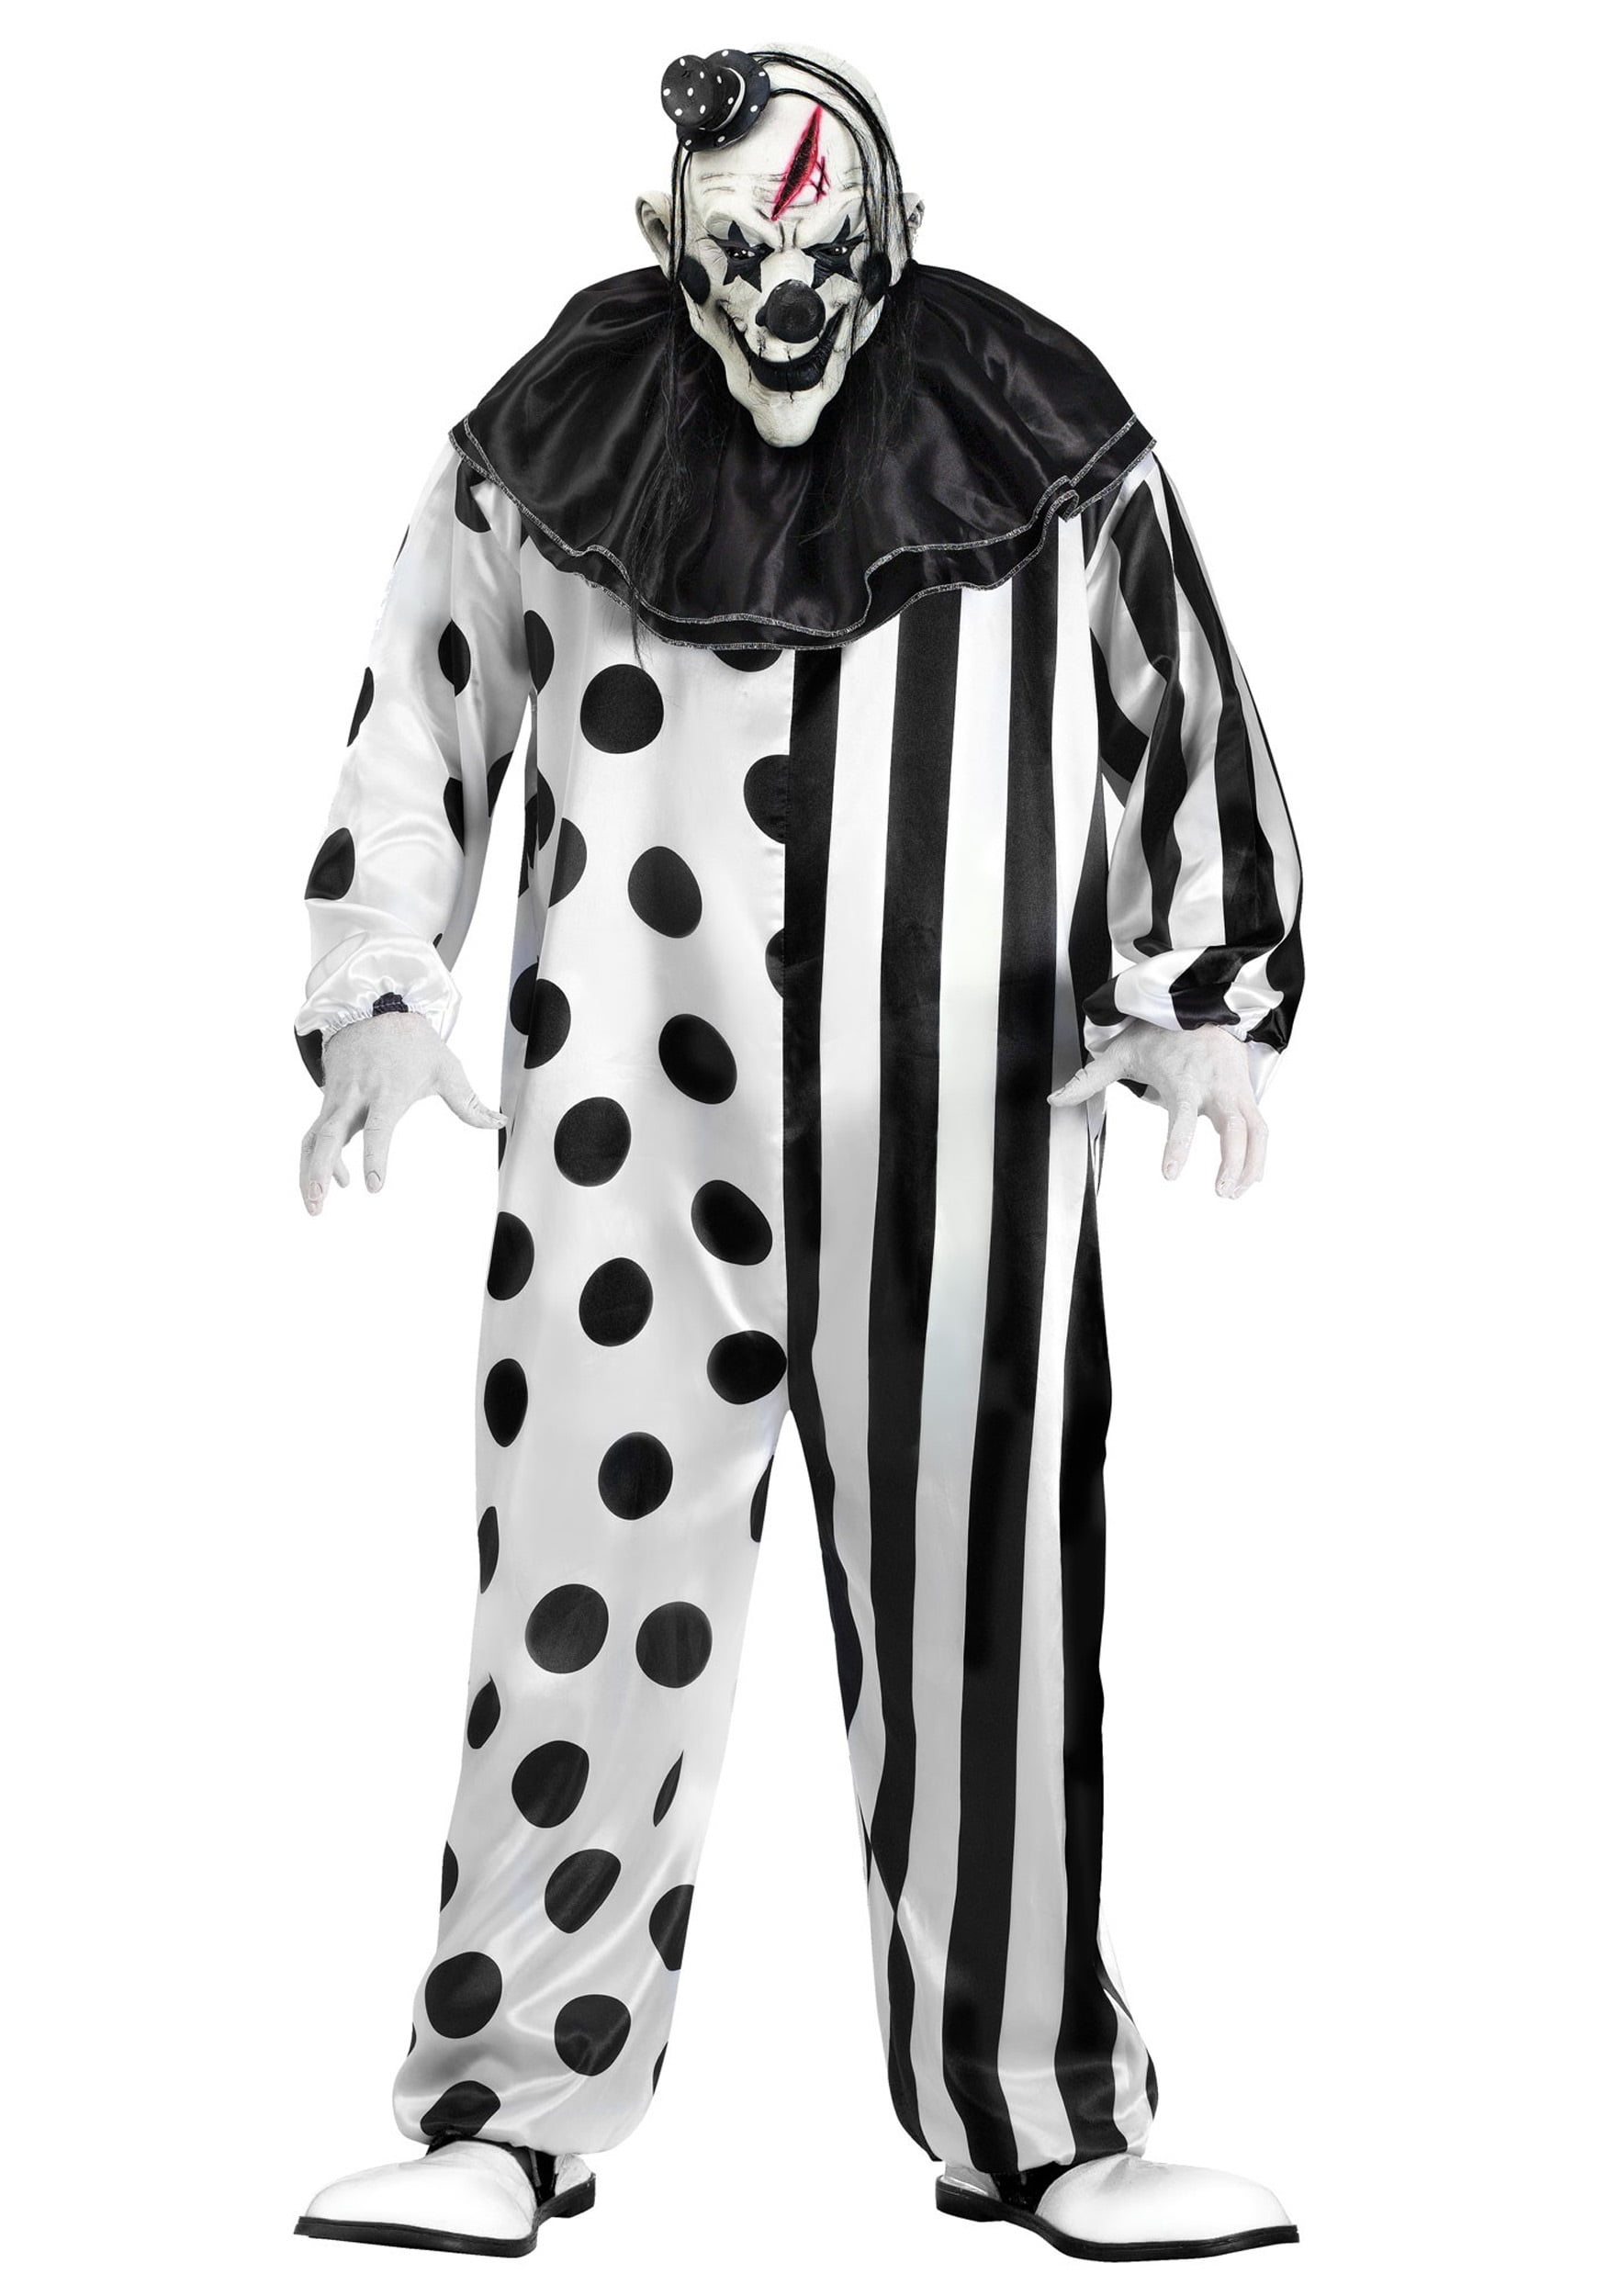 Sinister Harlequin Two Tone Tuxedo Halloween Clown Circus Costume Adult Men 